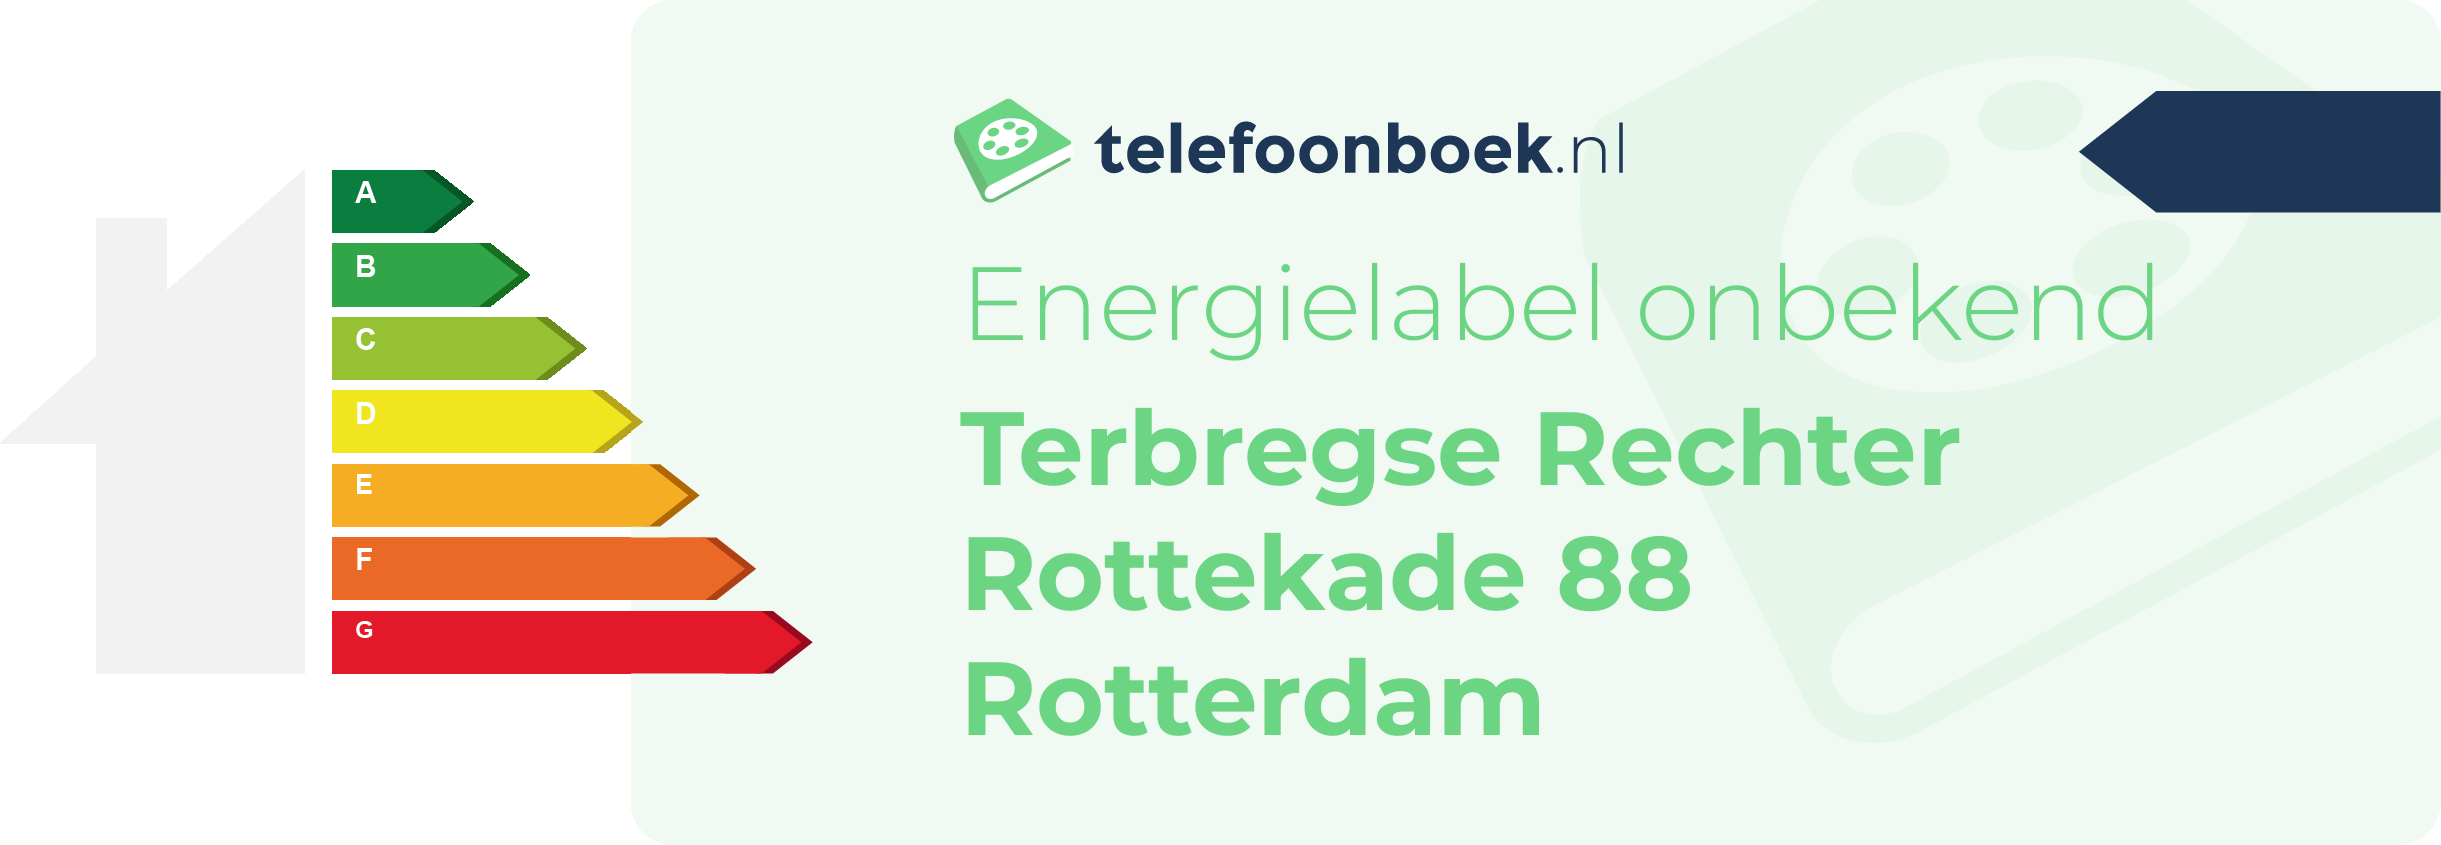 Energielabel Terbregse Rechter Rottekade 88 Rotterdam